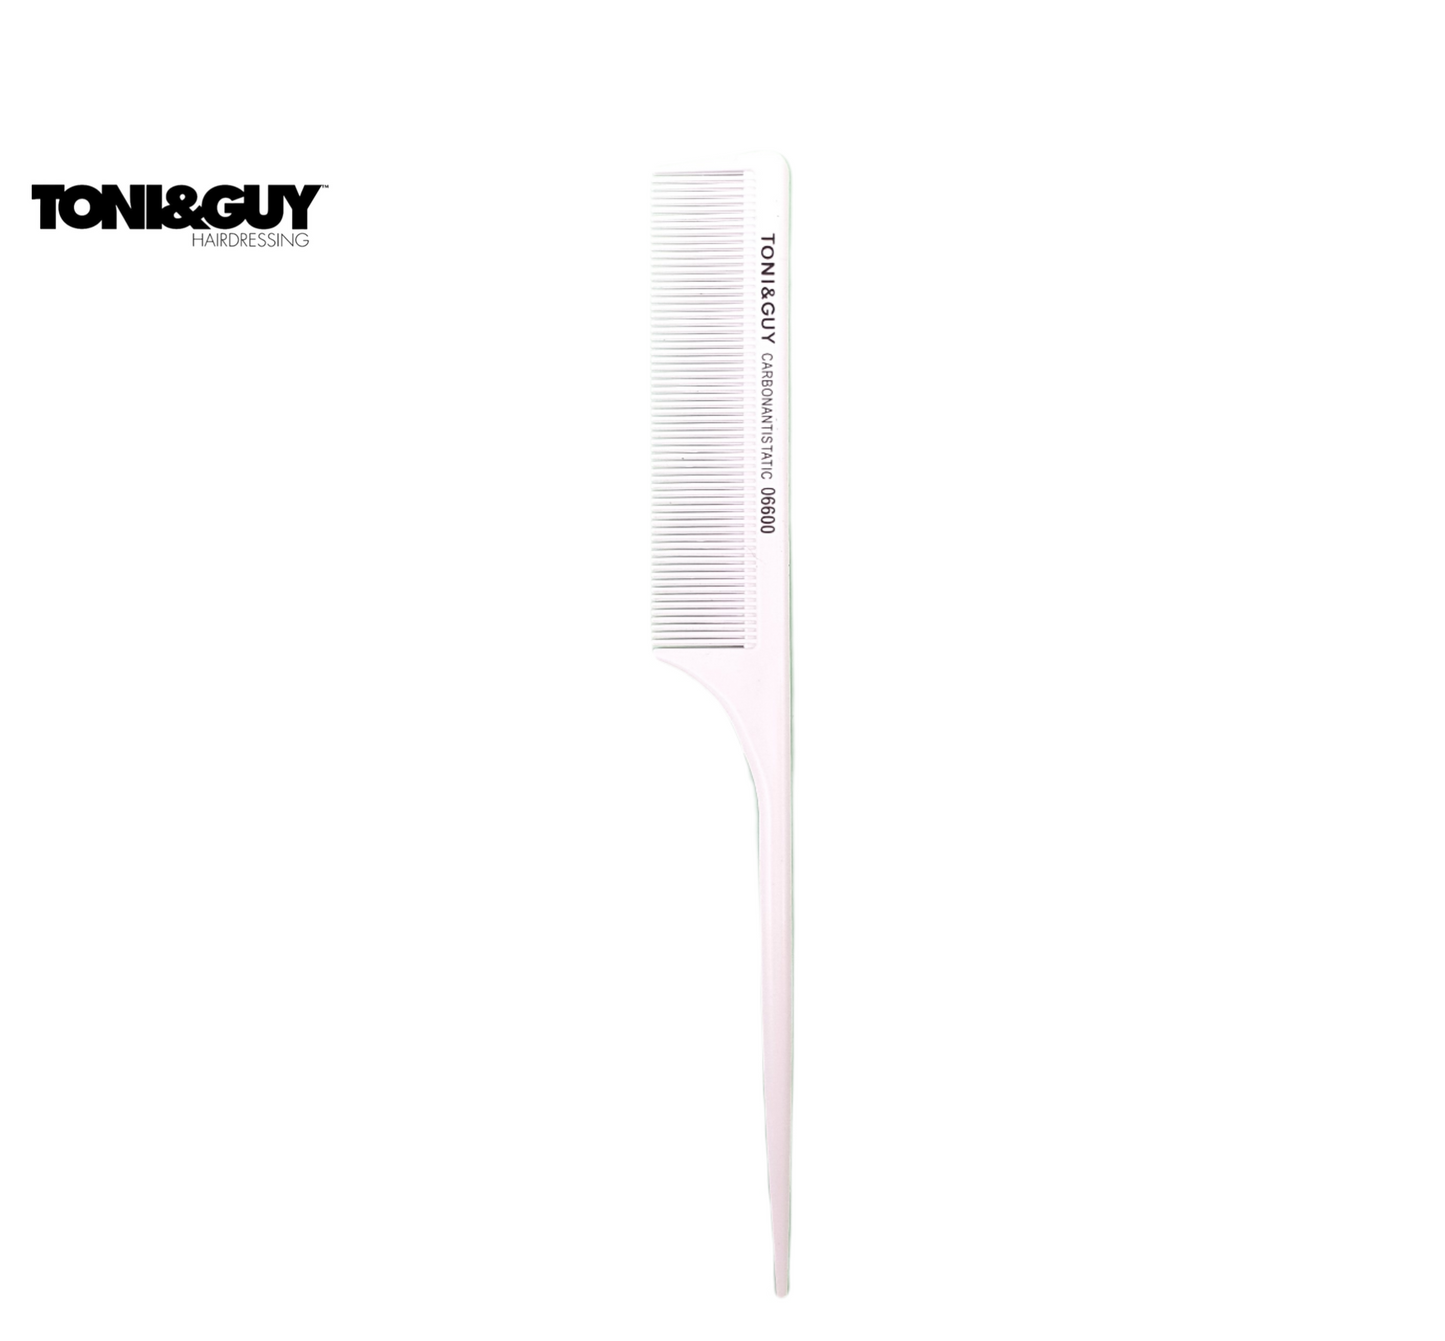 Toni & Guy Carbon Anti-static Comb | Professional Grade Hair Comb